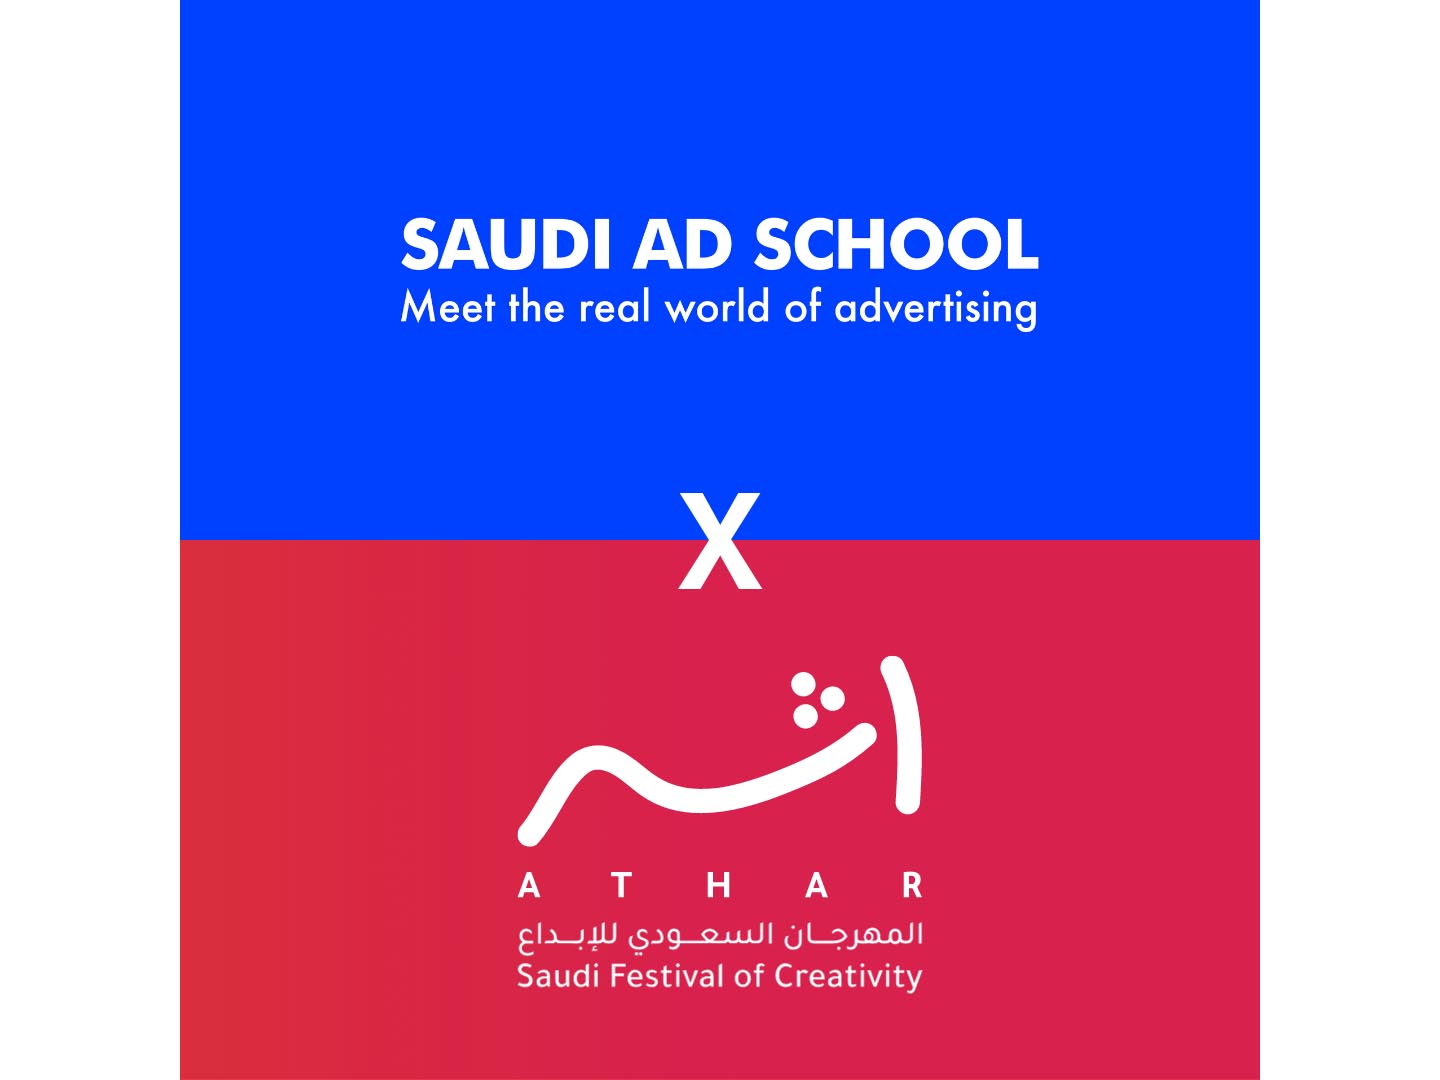 Saudi Ad School joins Athar Festival as its educational partner